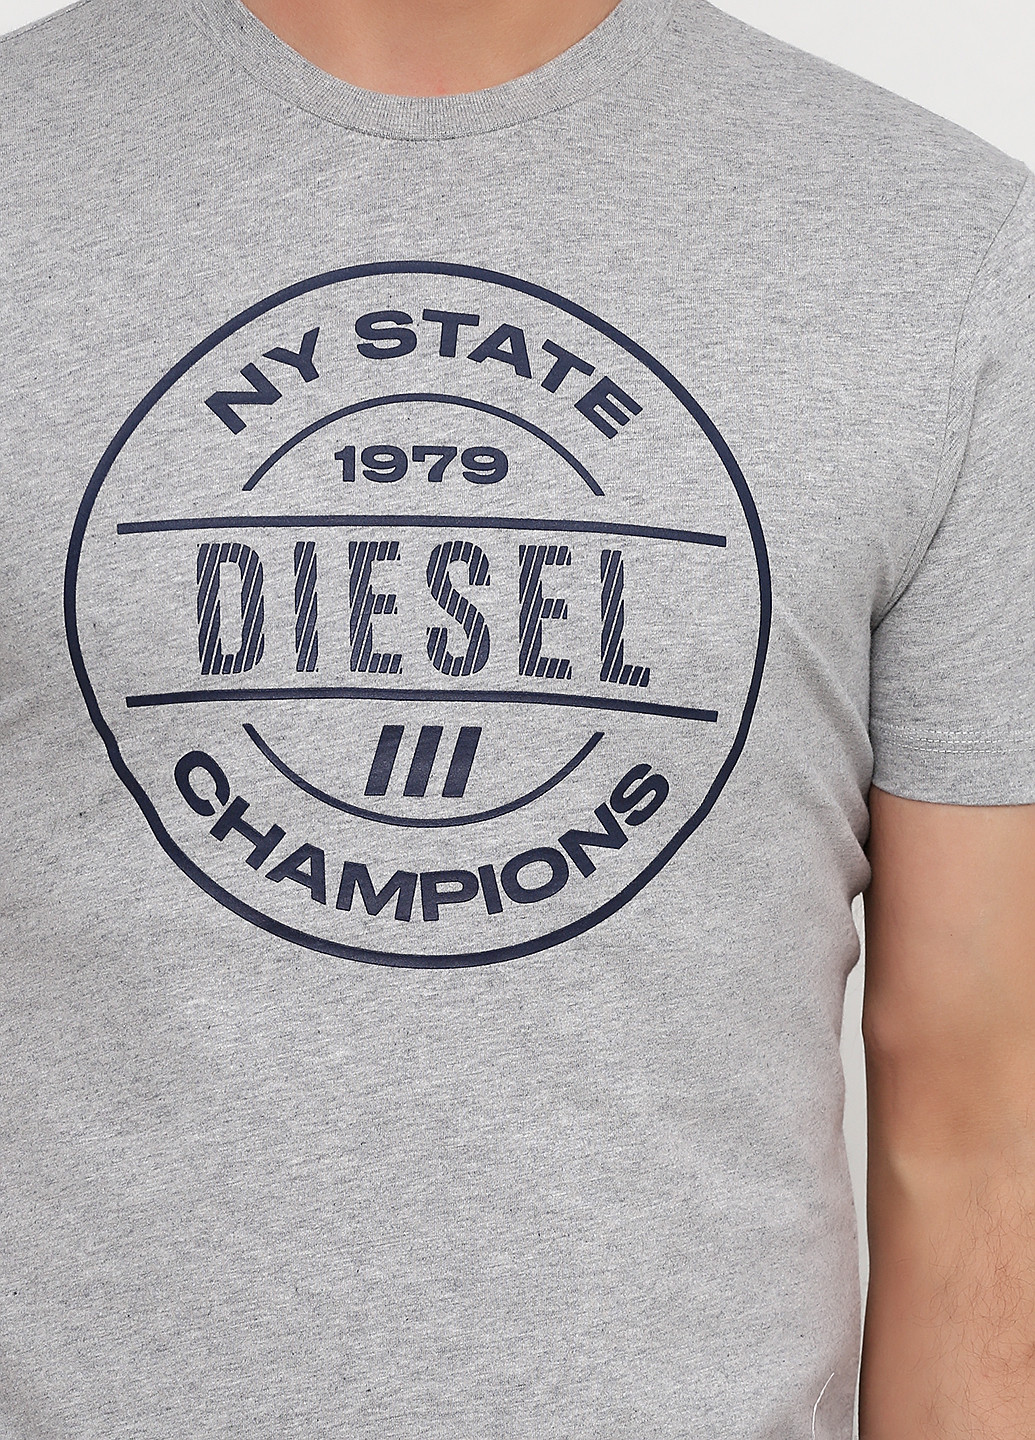 Комбинированная летняя футболка Diesel